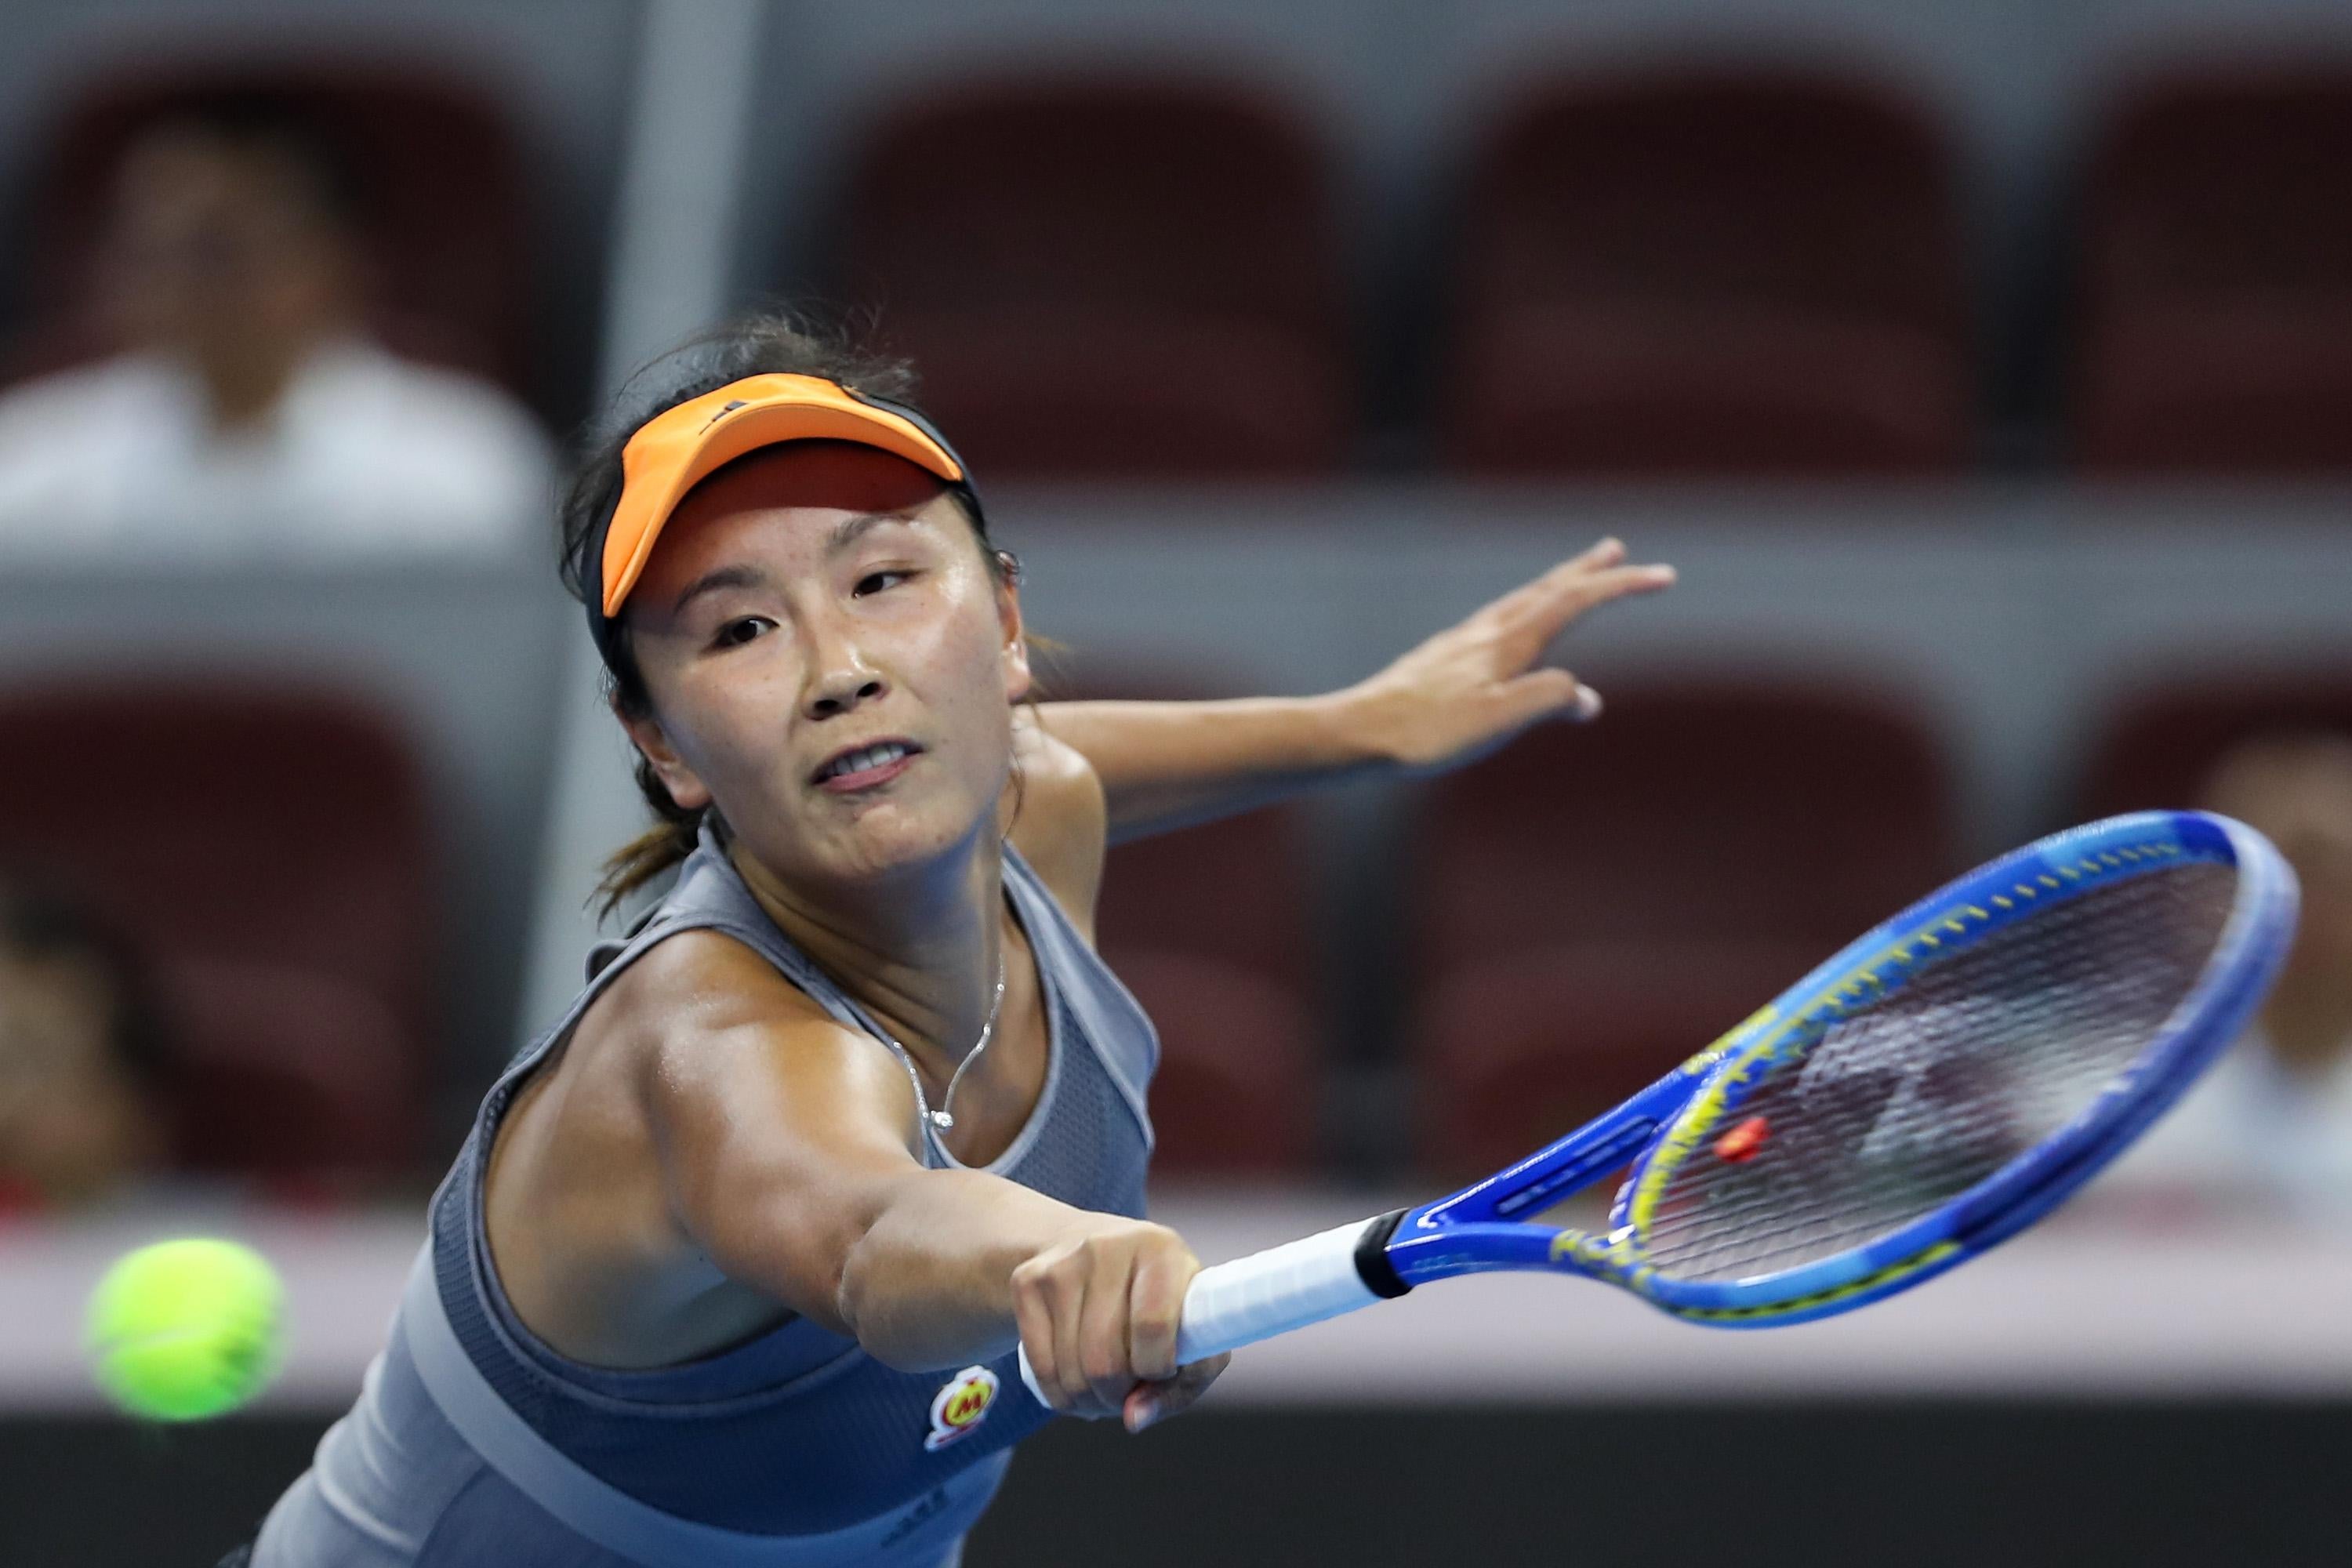 Peng Shuai extends her racket to try to return a shot.